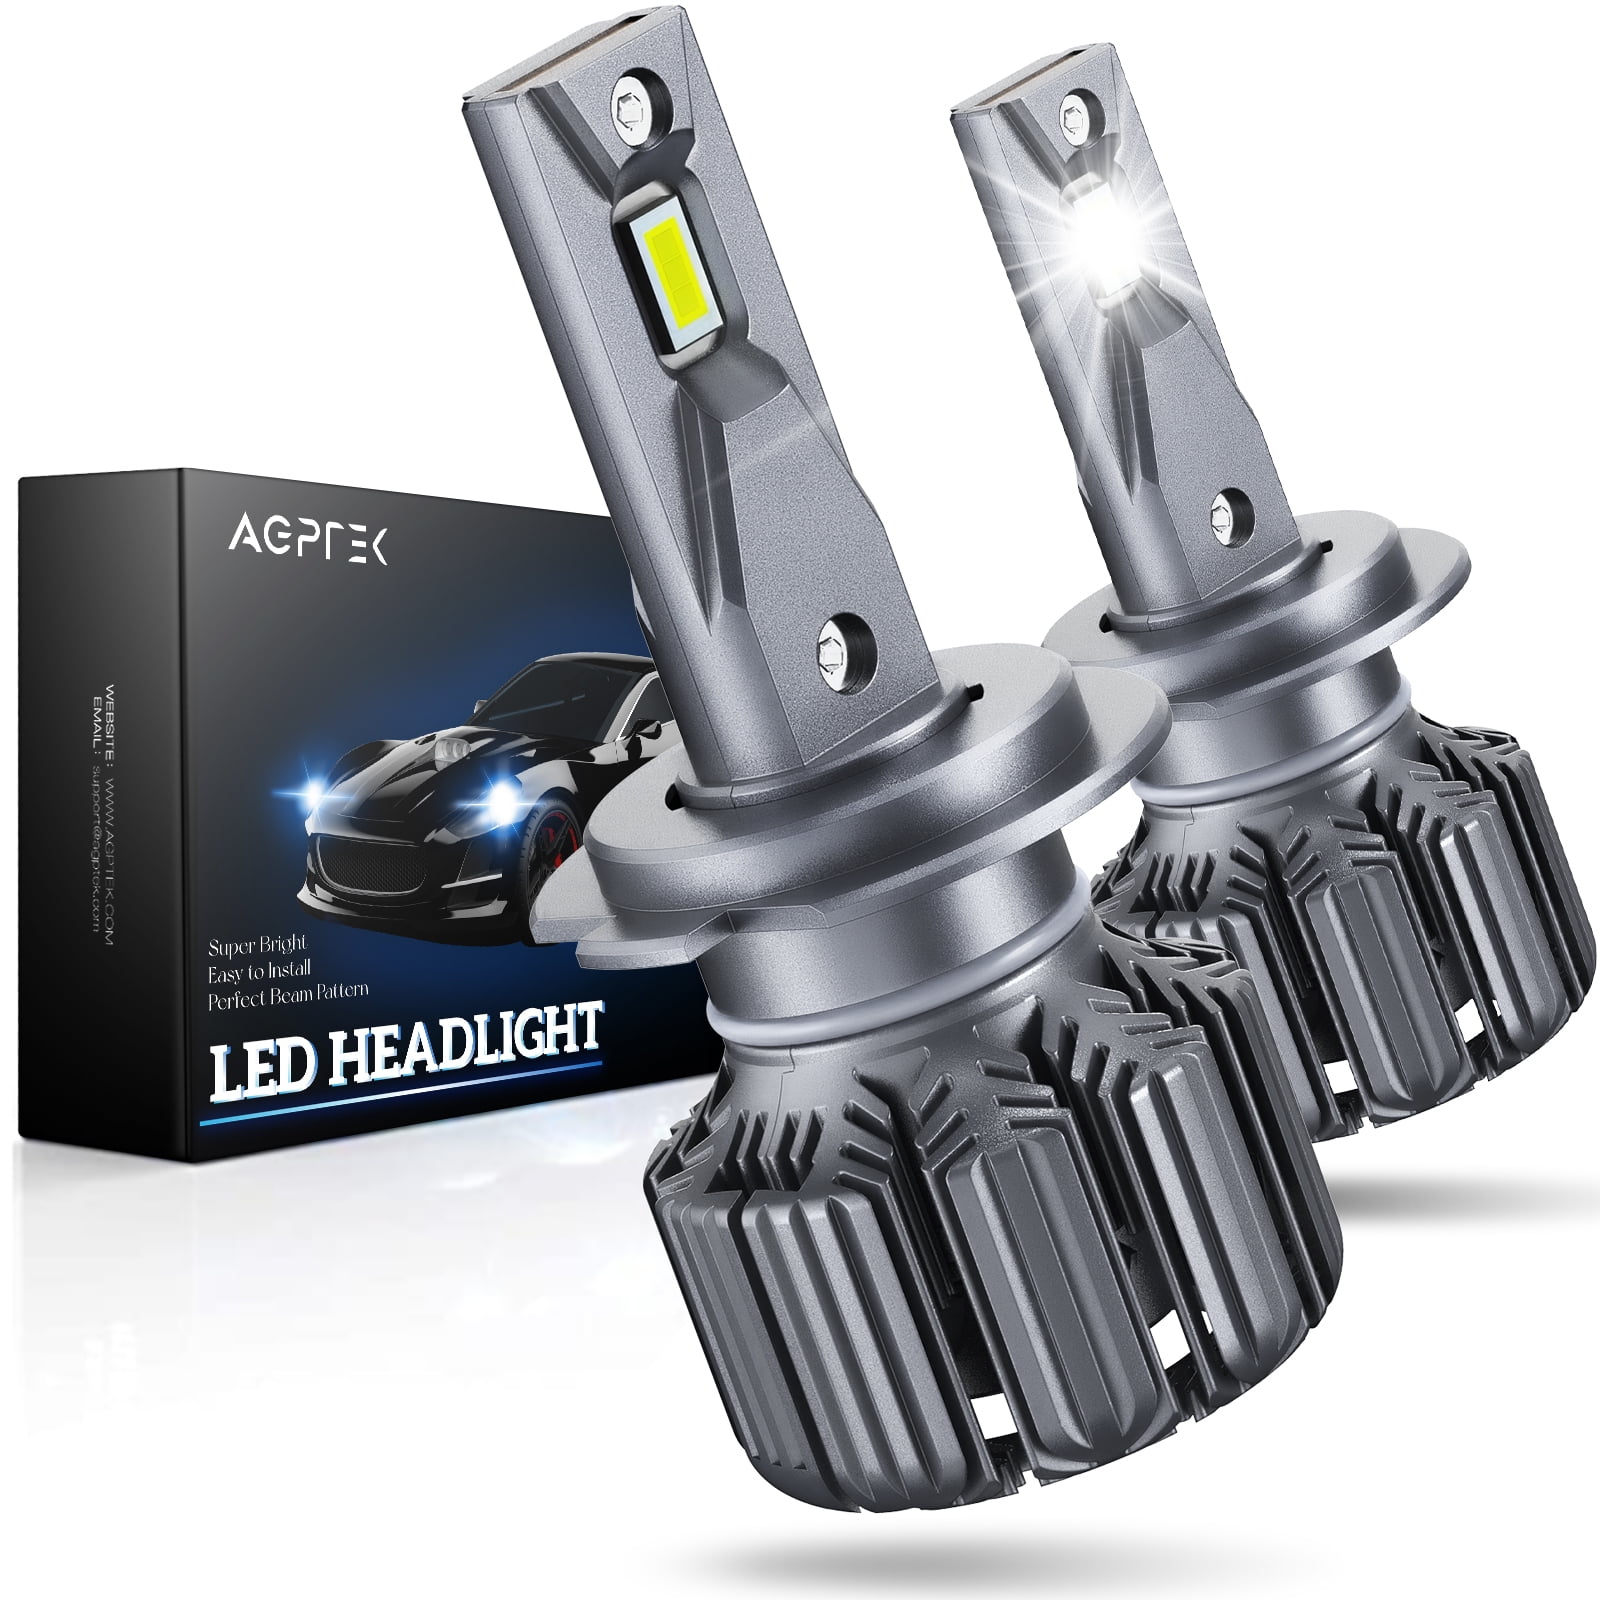 AGPTEK H7 LED Headlight Bulbs, 70W 12000 Lumens Car Headlamps 6000K White  360-degree Adjustable Beam CSP Chips Conversion Kit Halogen Upgrade  Replacement, IP68 Waterproof, Pack of 2 